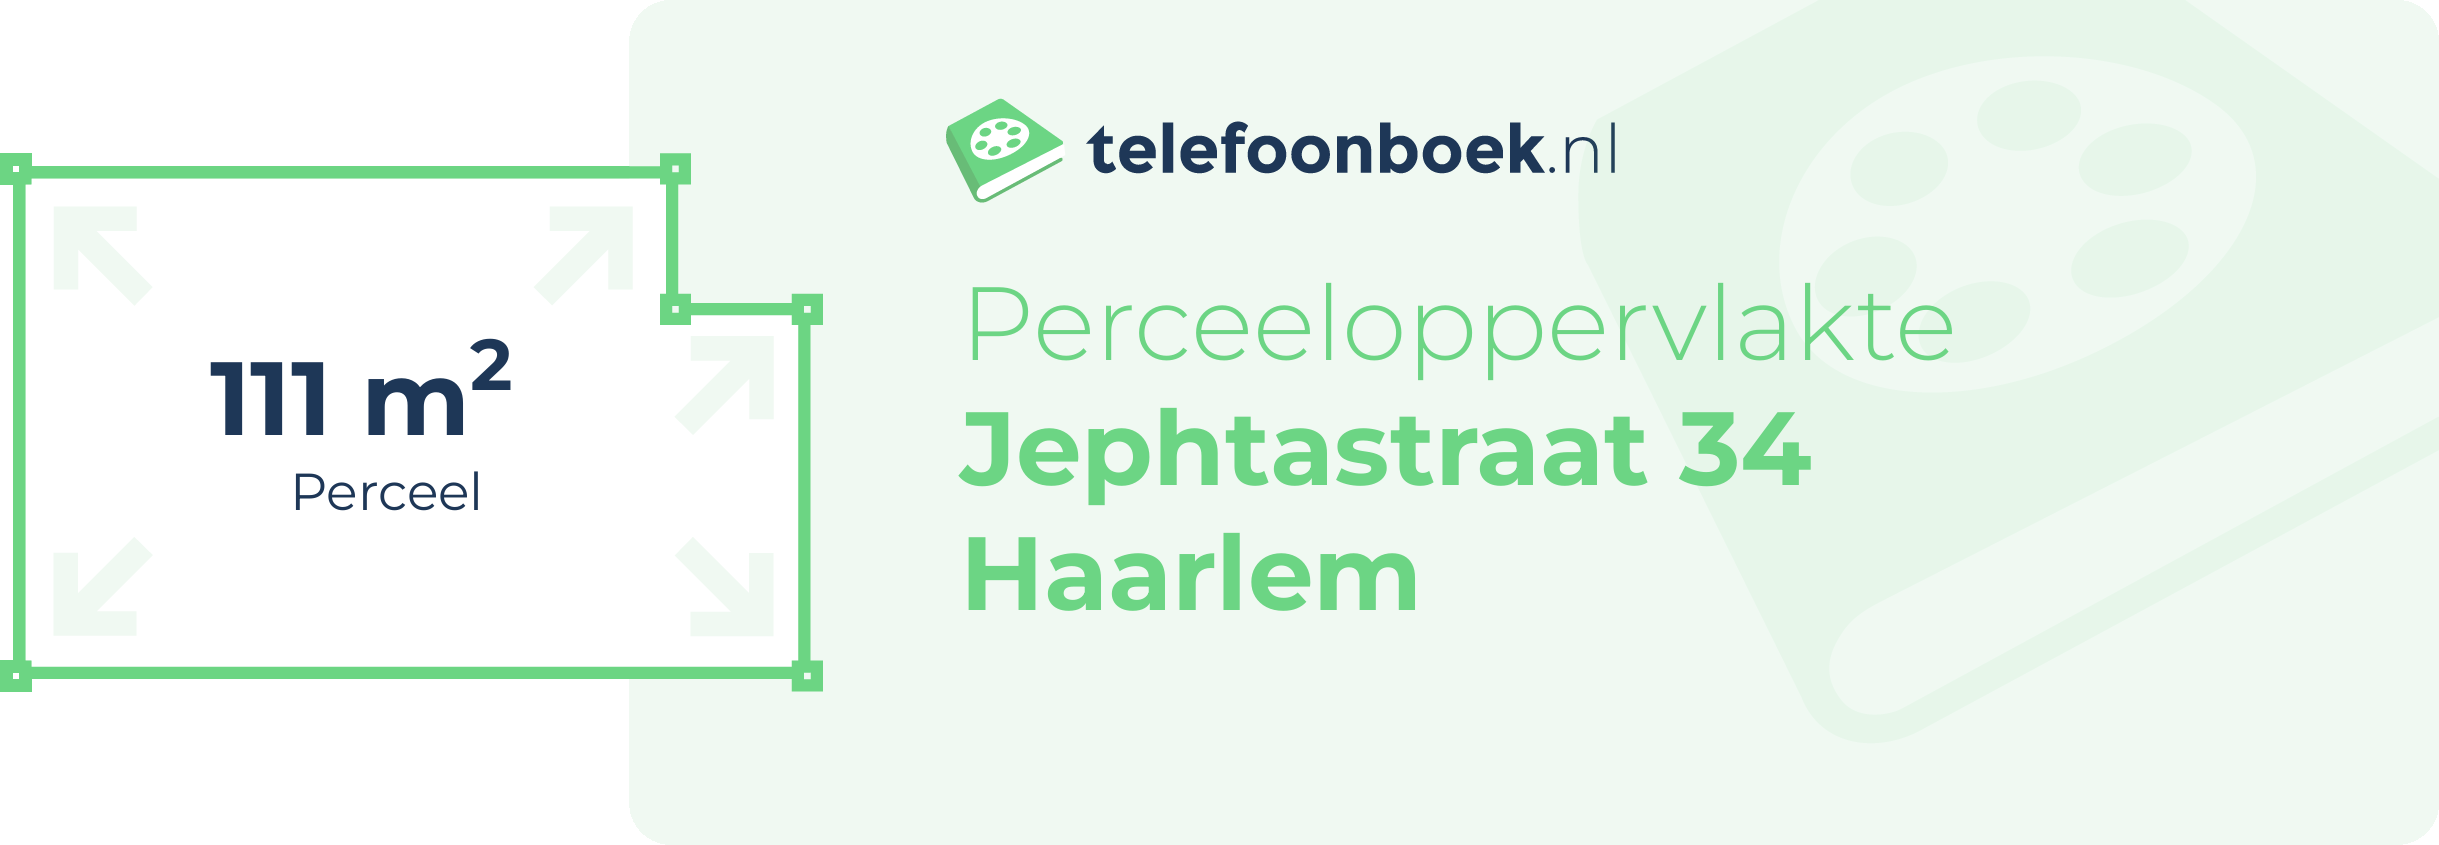 Perceeloppervlakte Jephtastraat 34 Haarlem